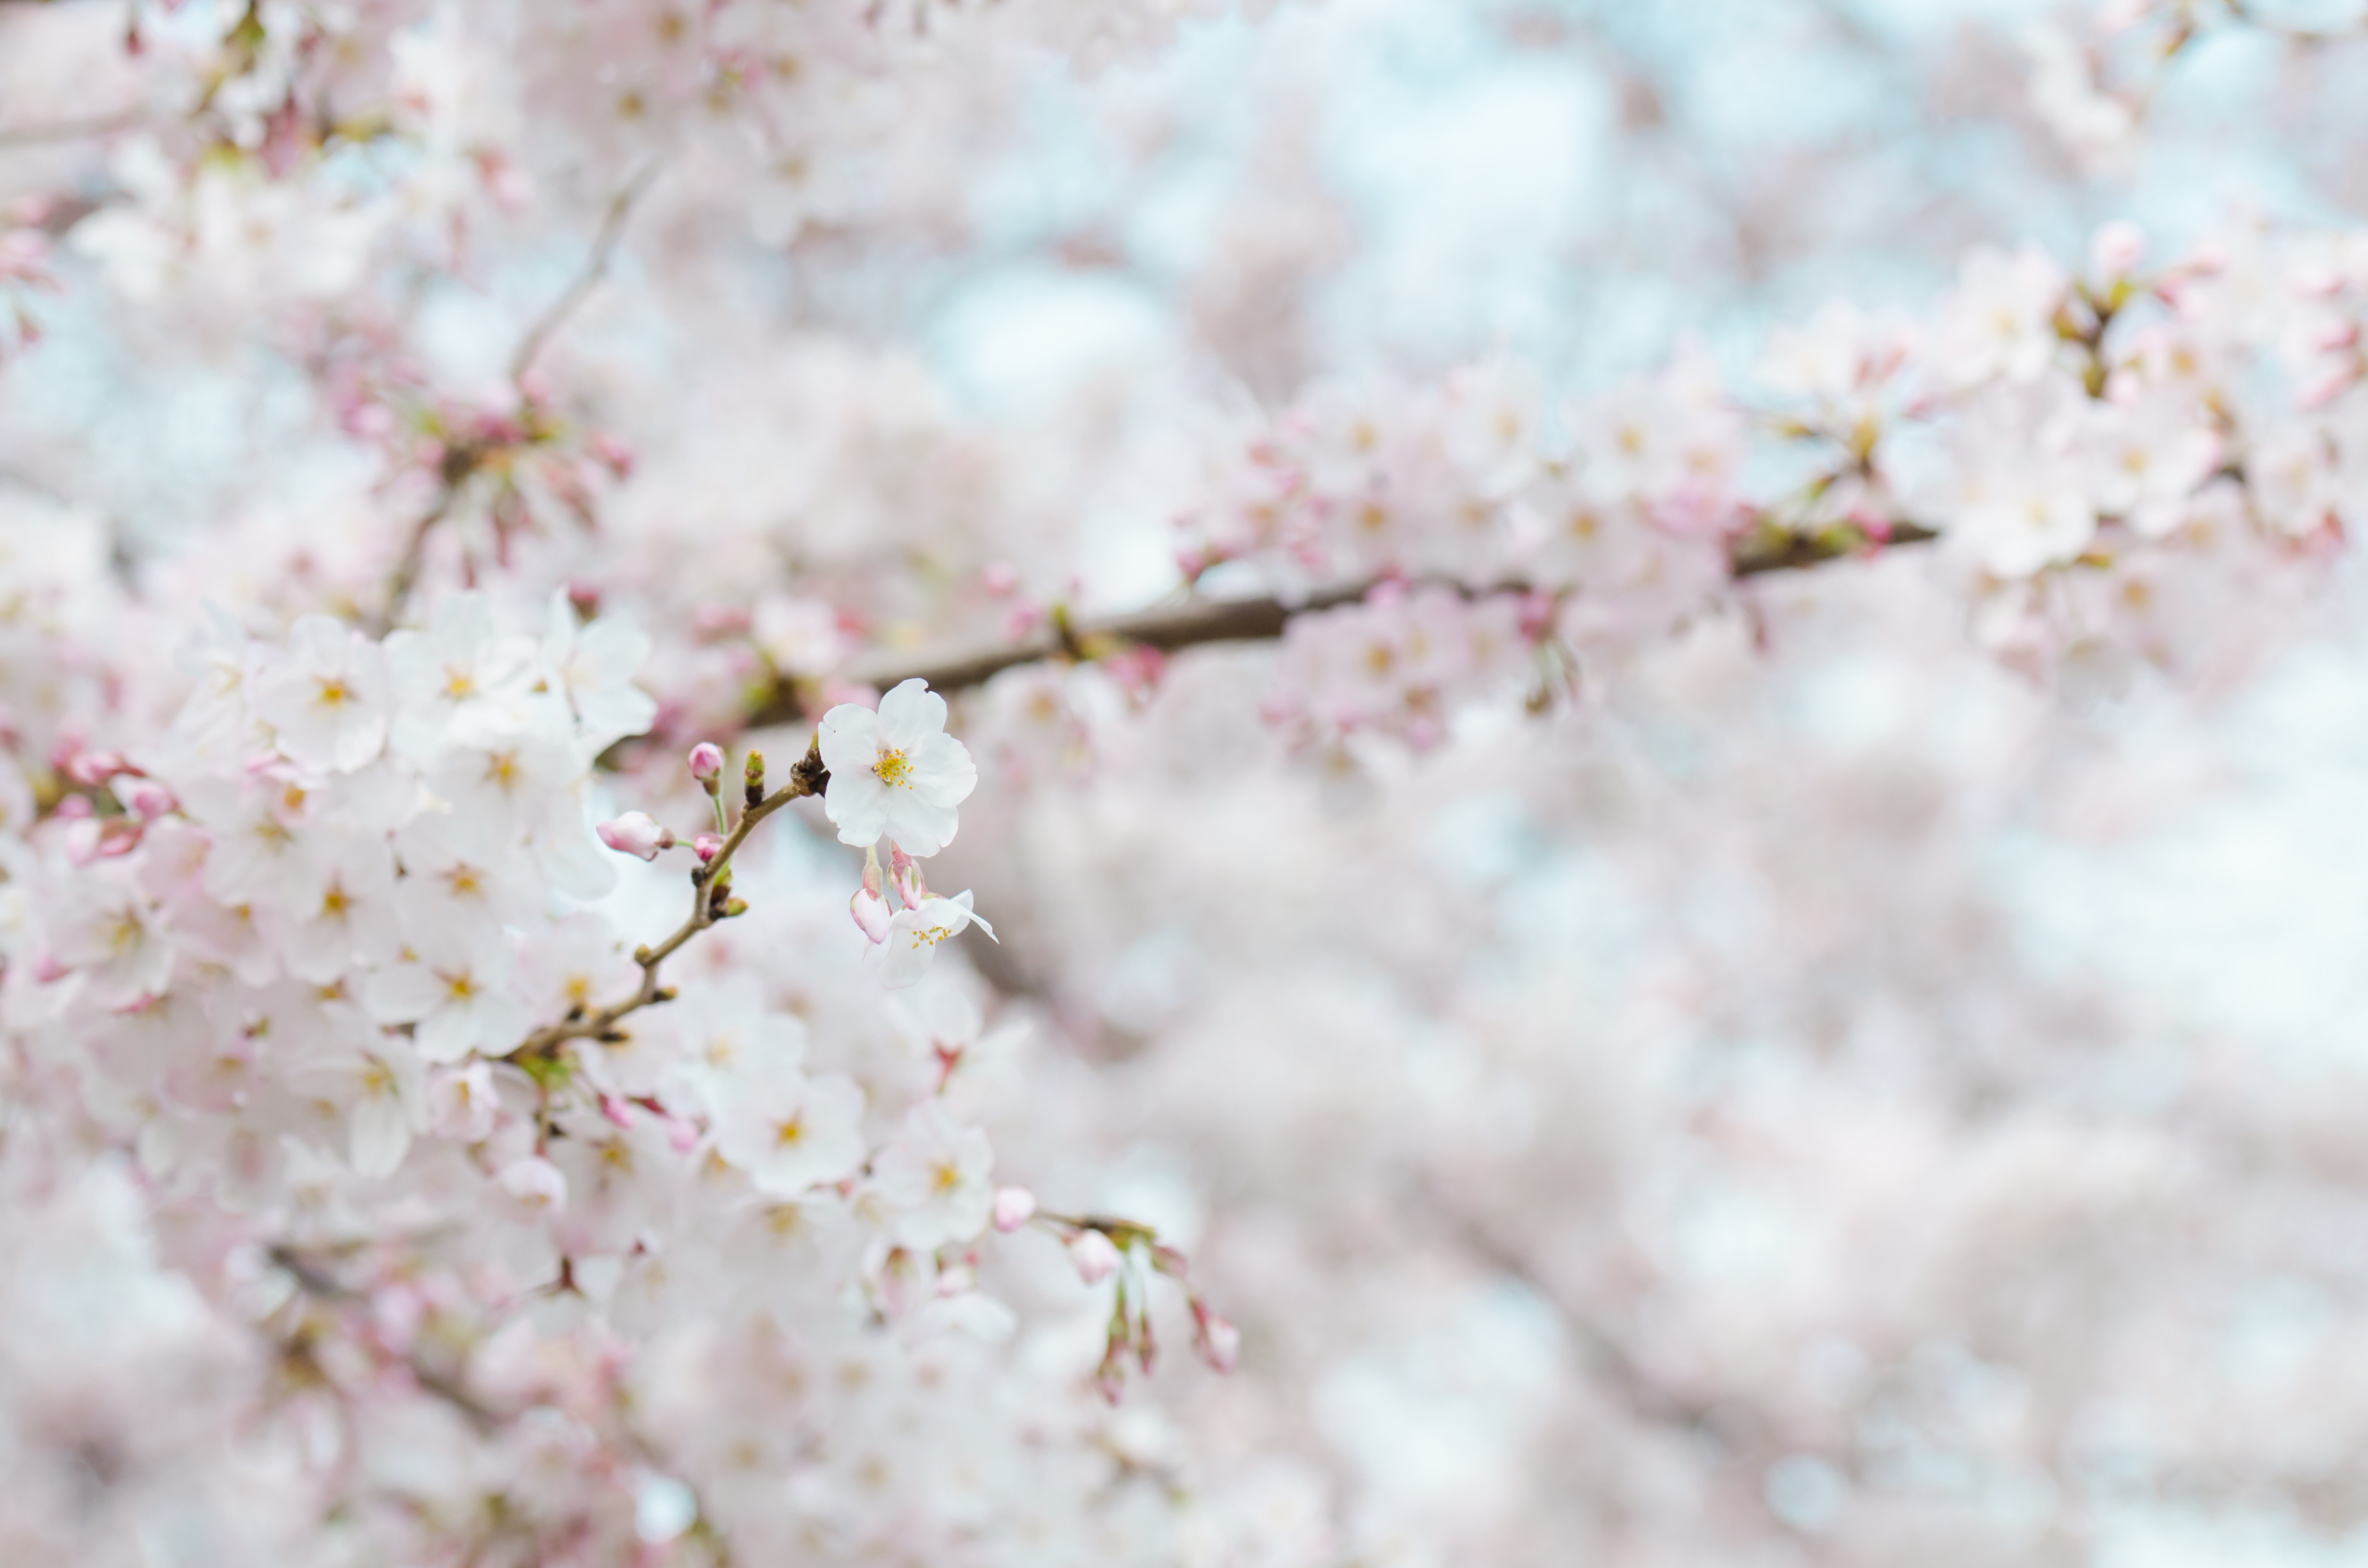 1000+ Interesting Cherry Blossom Photos · Pexels · Free Stock Photos